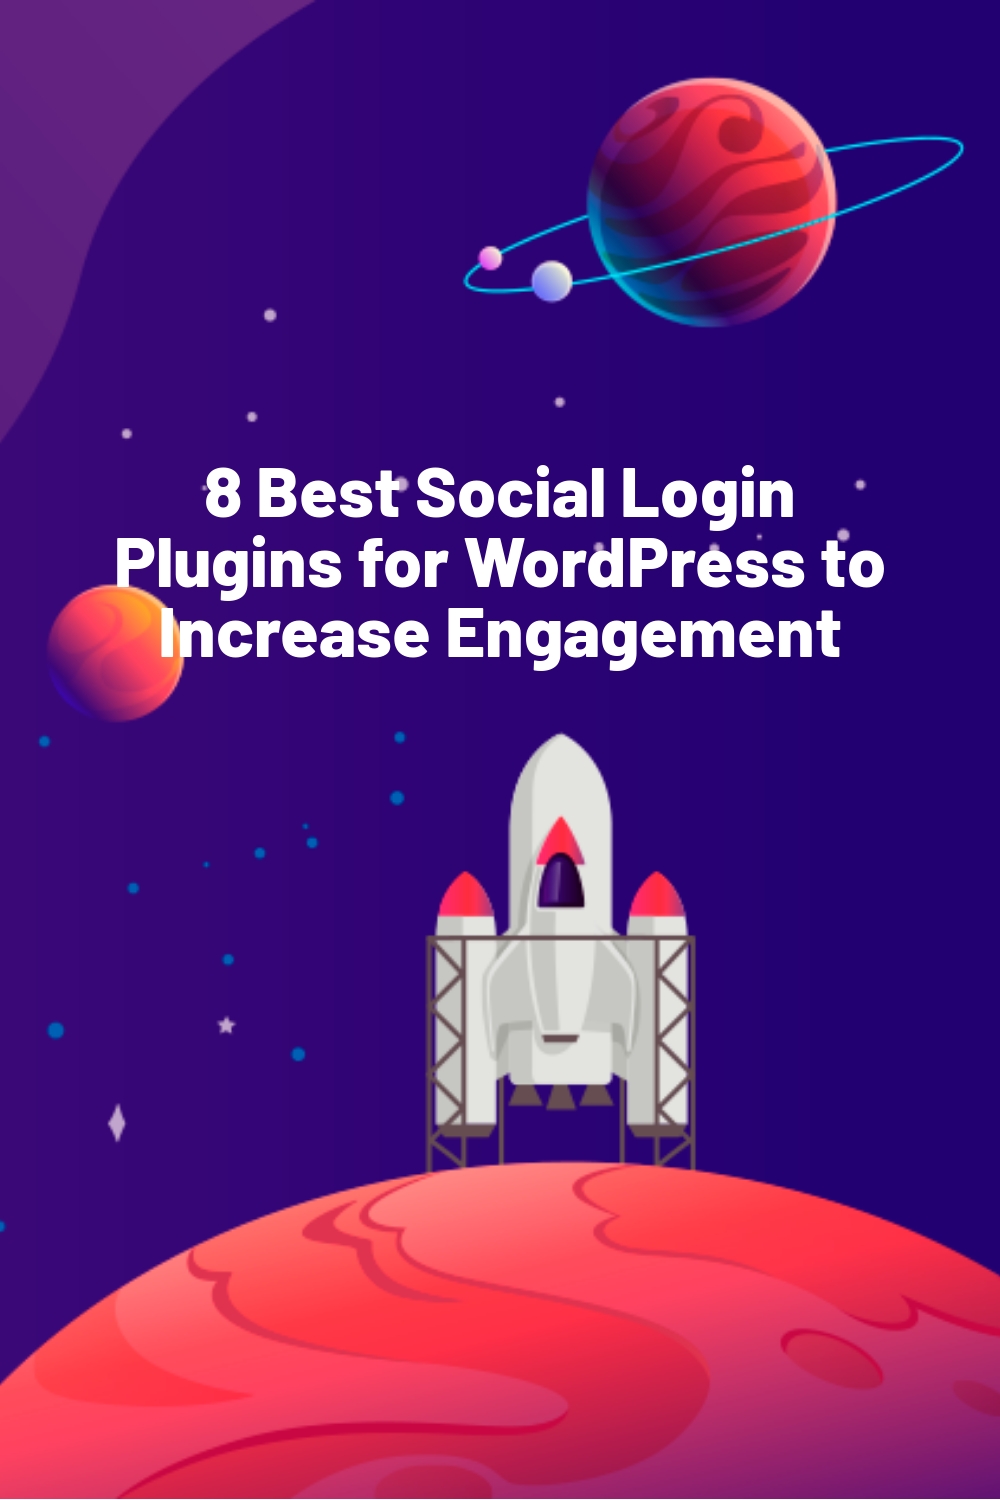 8 Best Social Login Plugins for WordPress to Increase Engagement